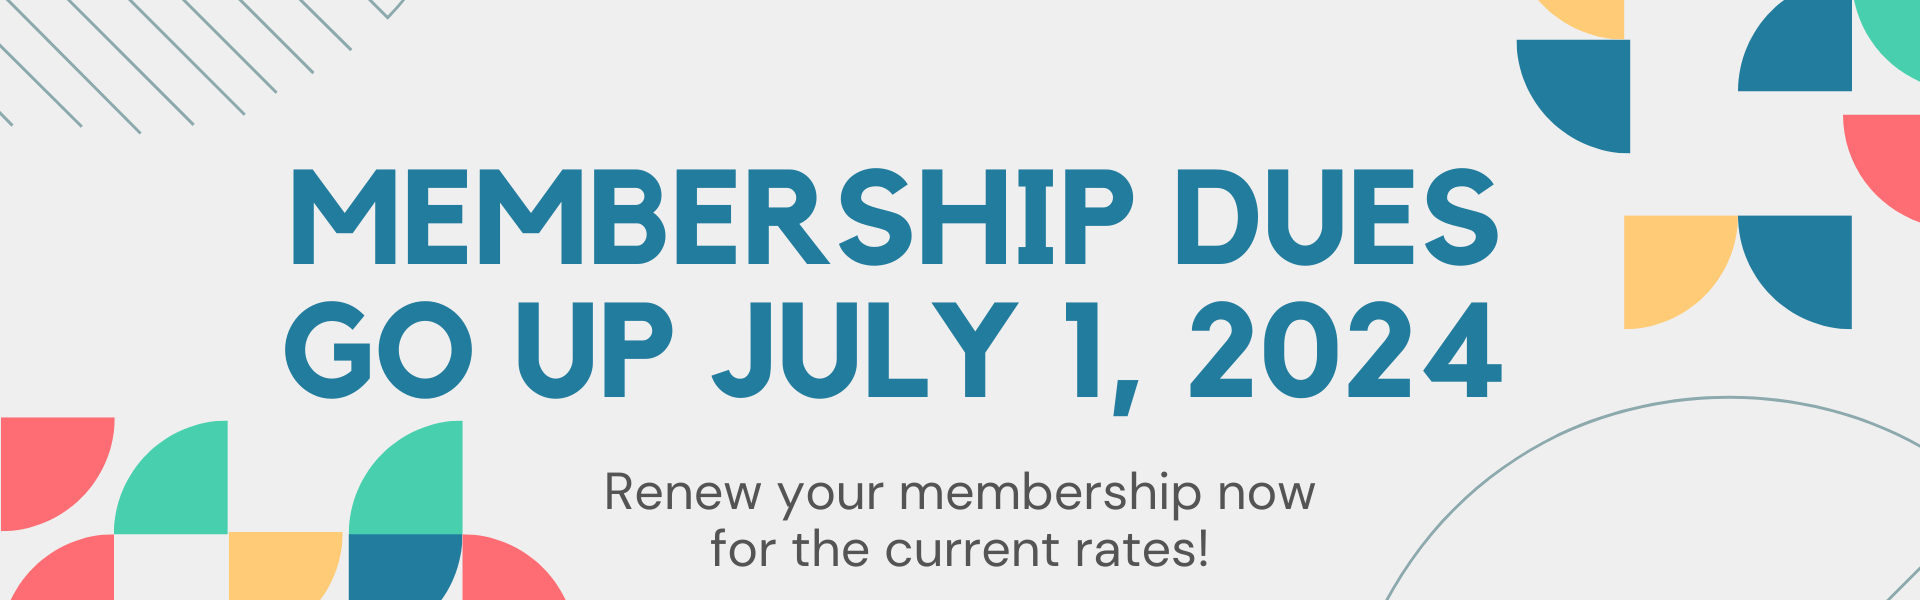 membership dues change